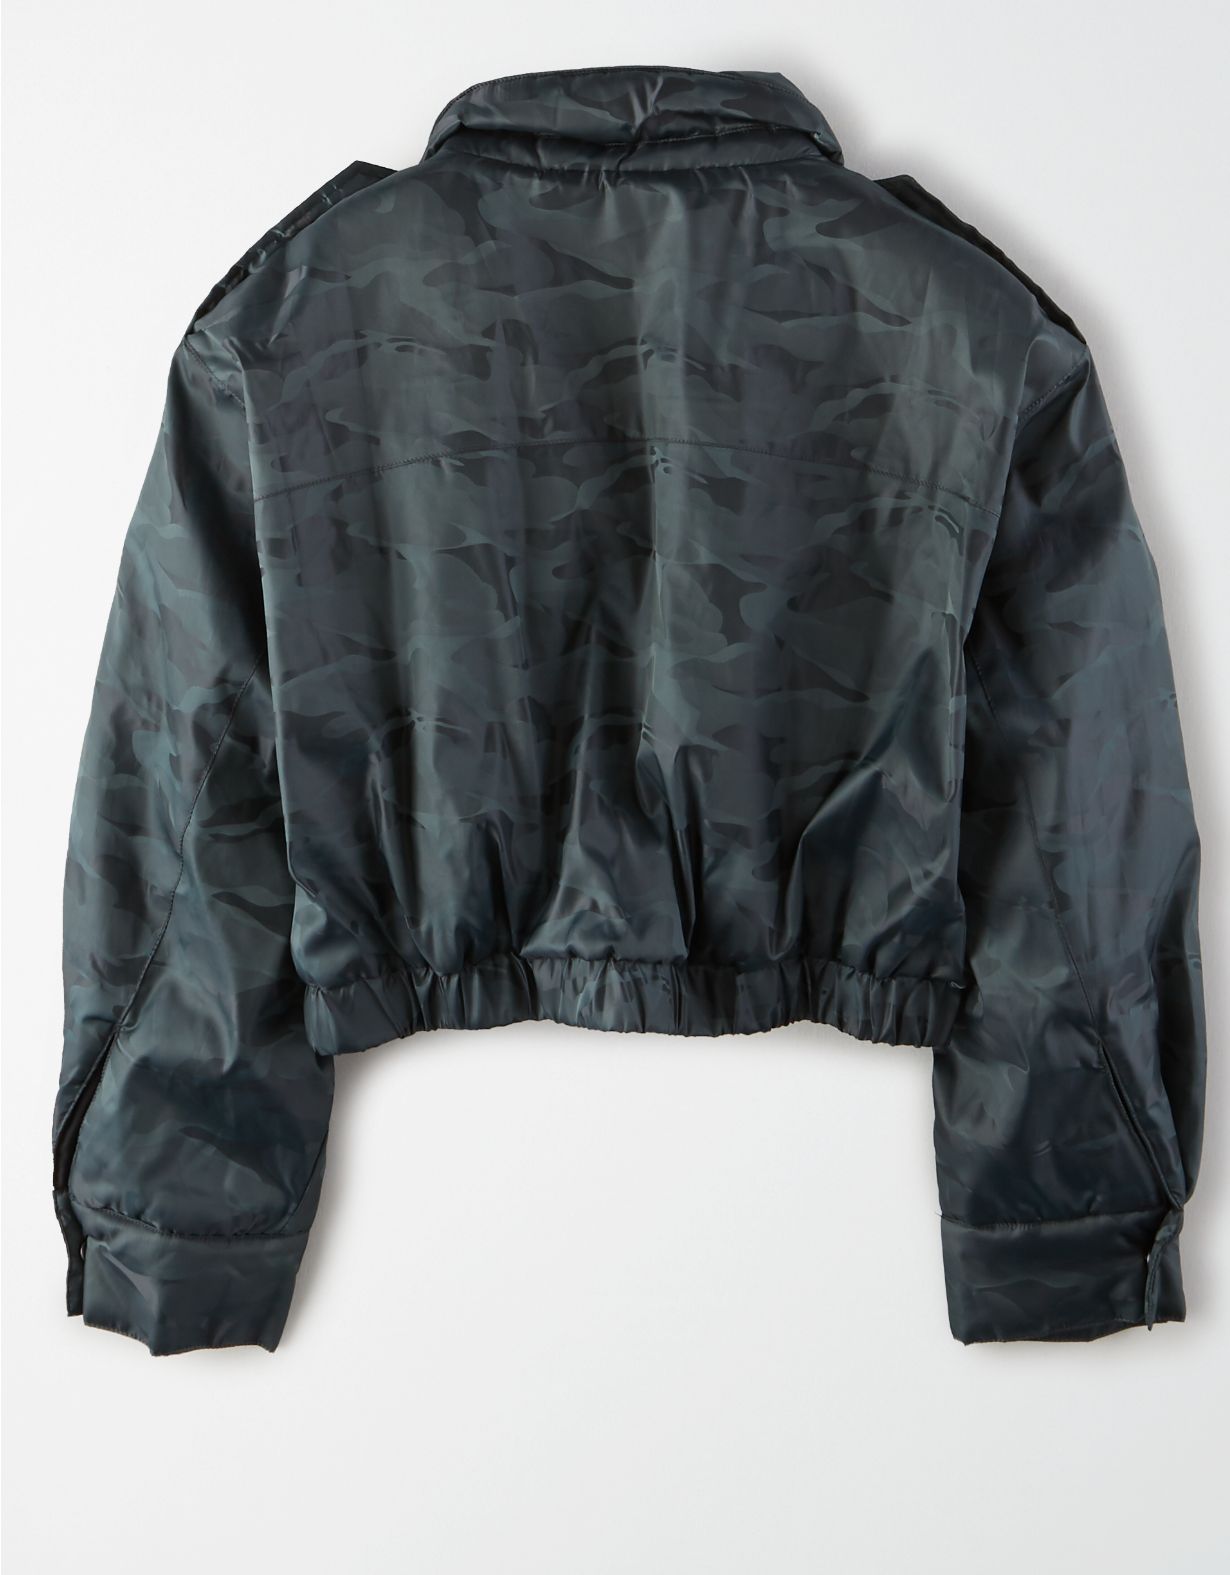 AE Studio Camo Cropped Zip Up Jacket